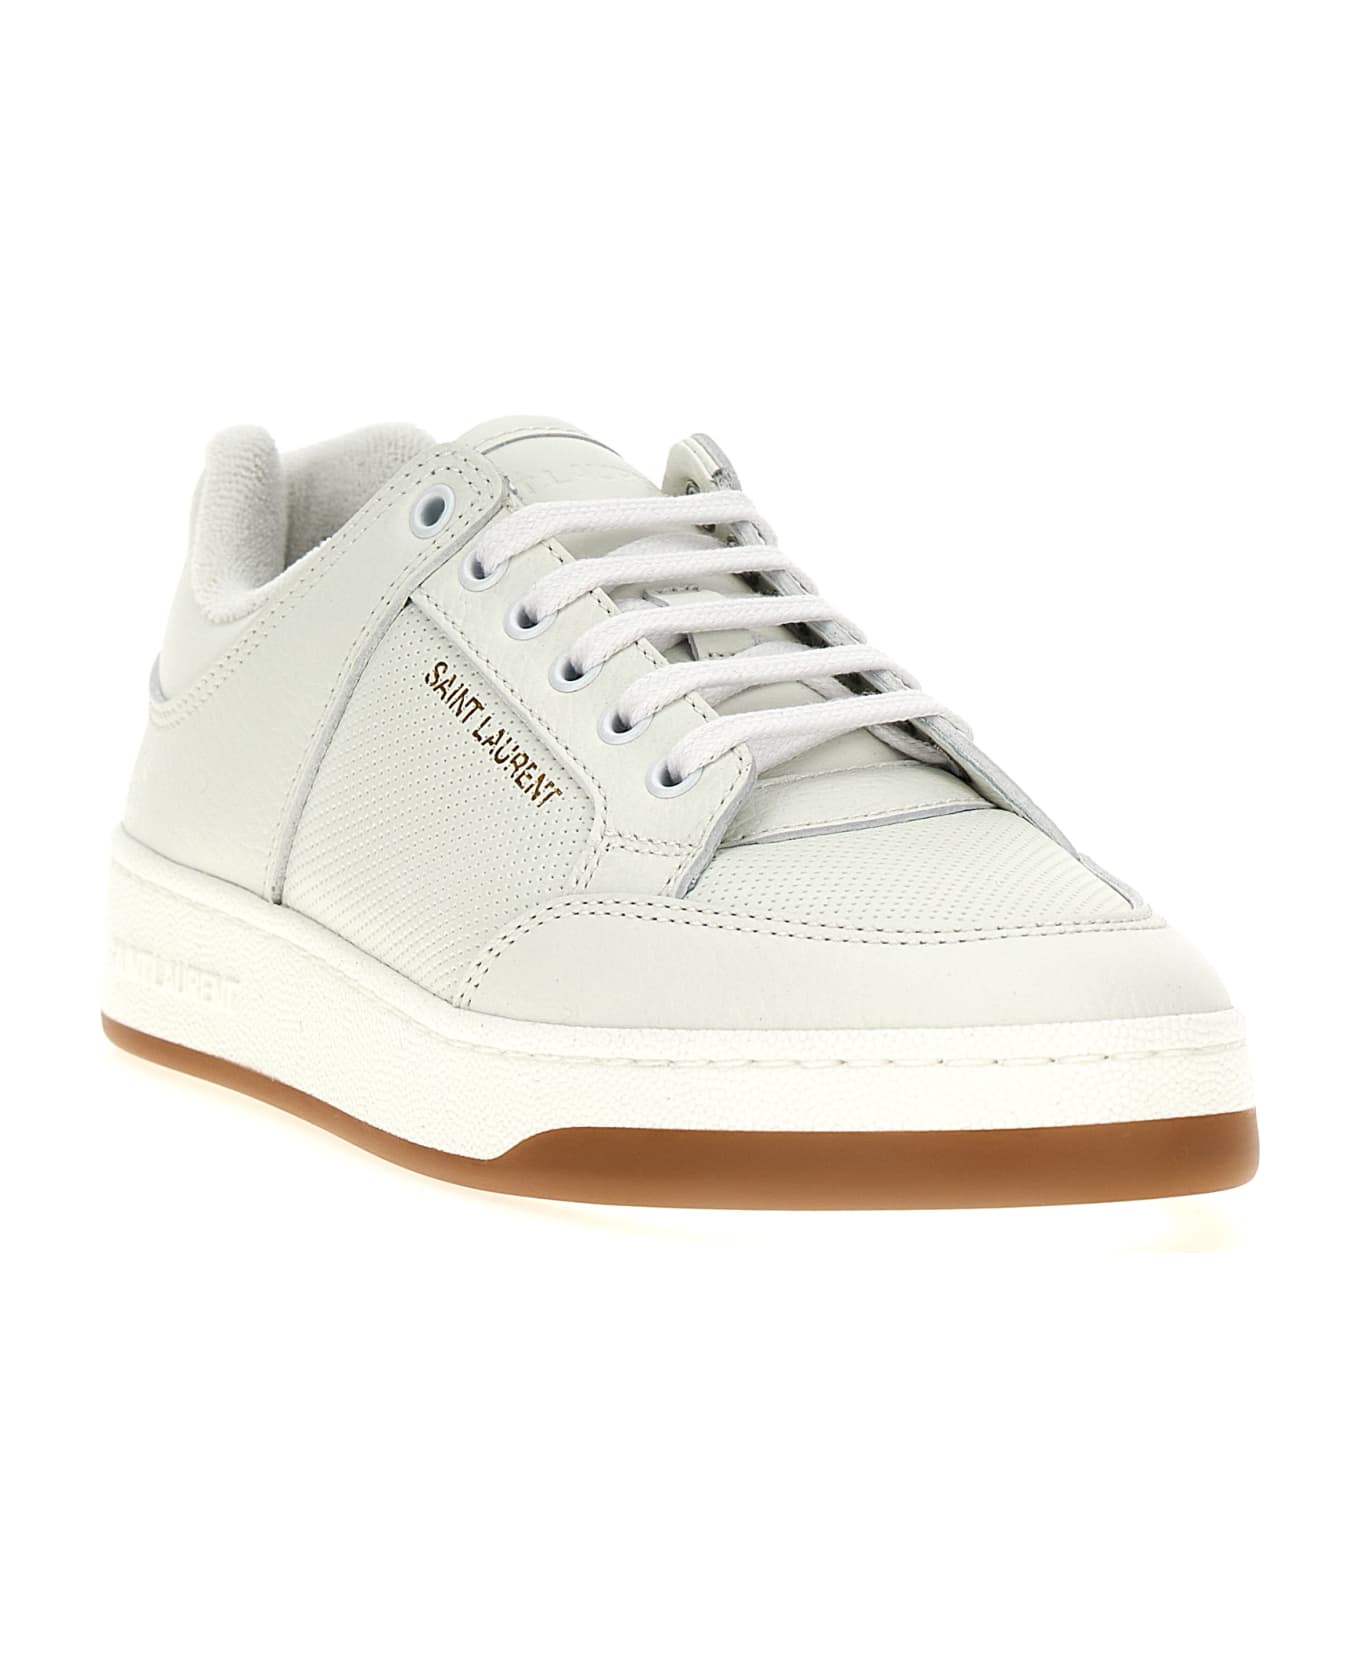 Saint Laurent 'sl/61' Sneakers - White